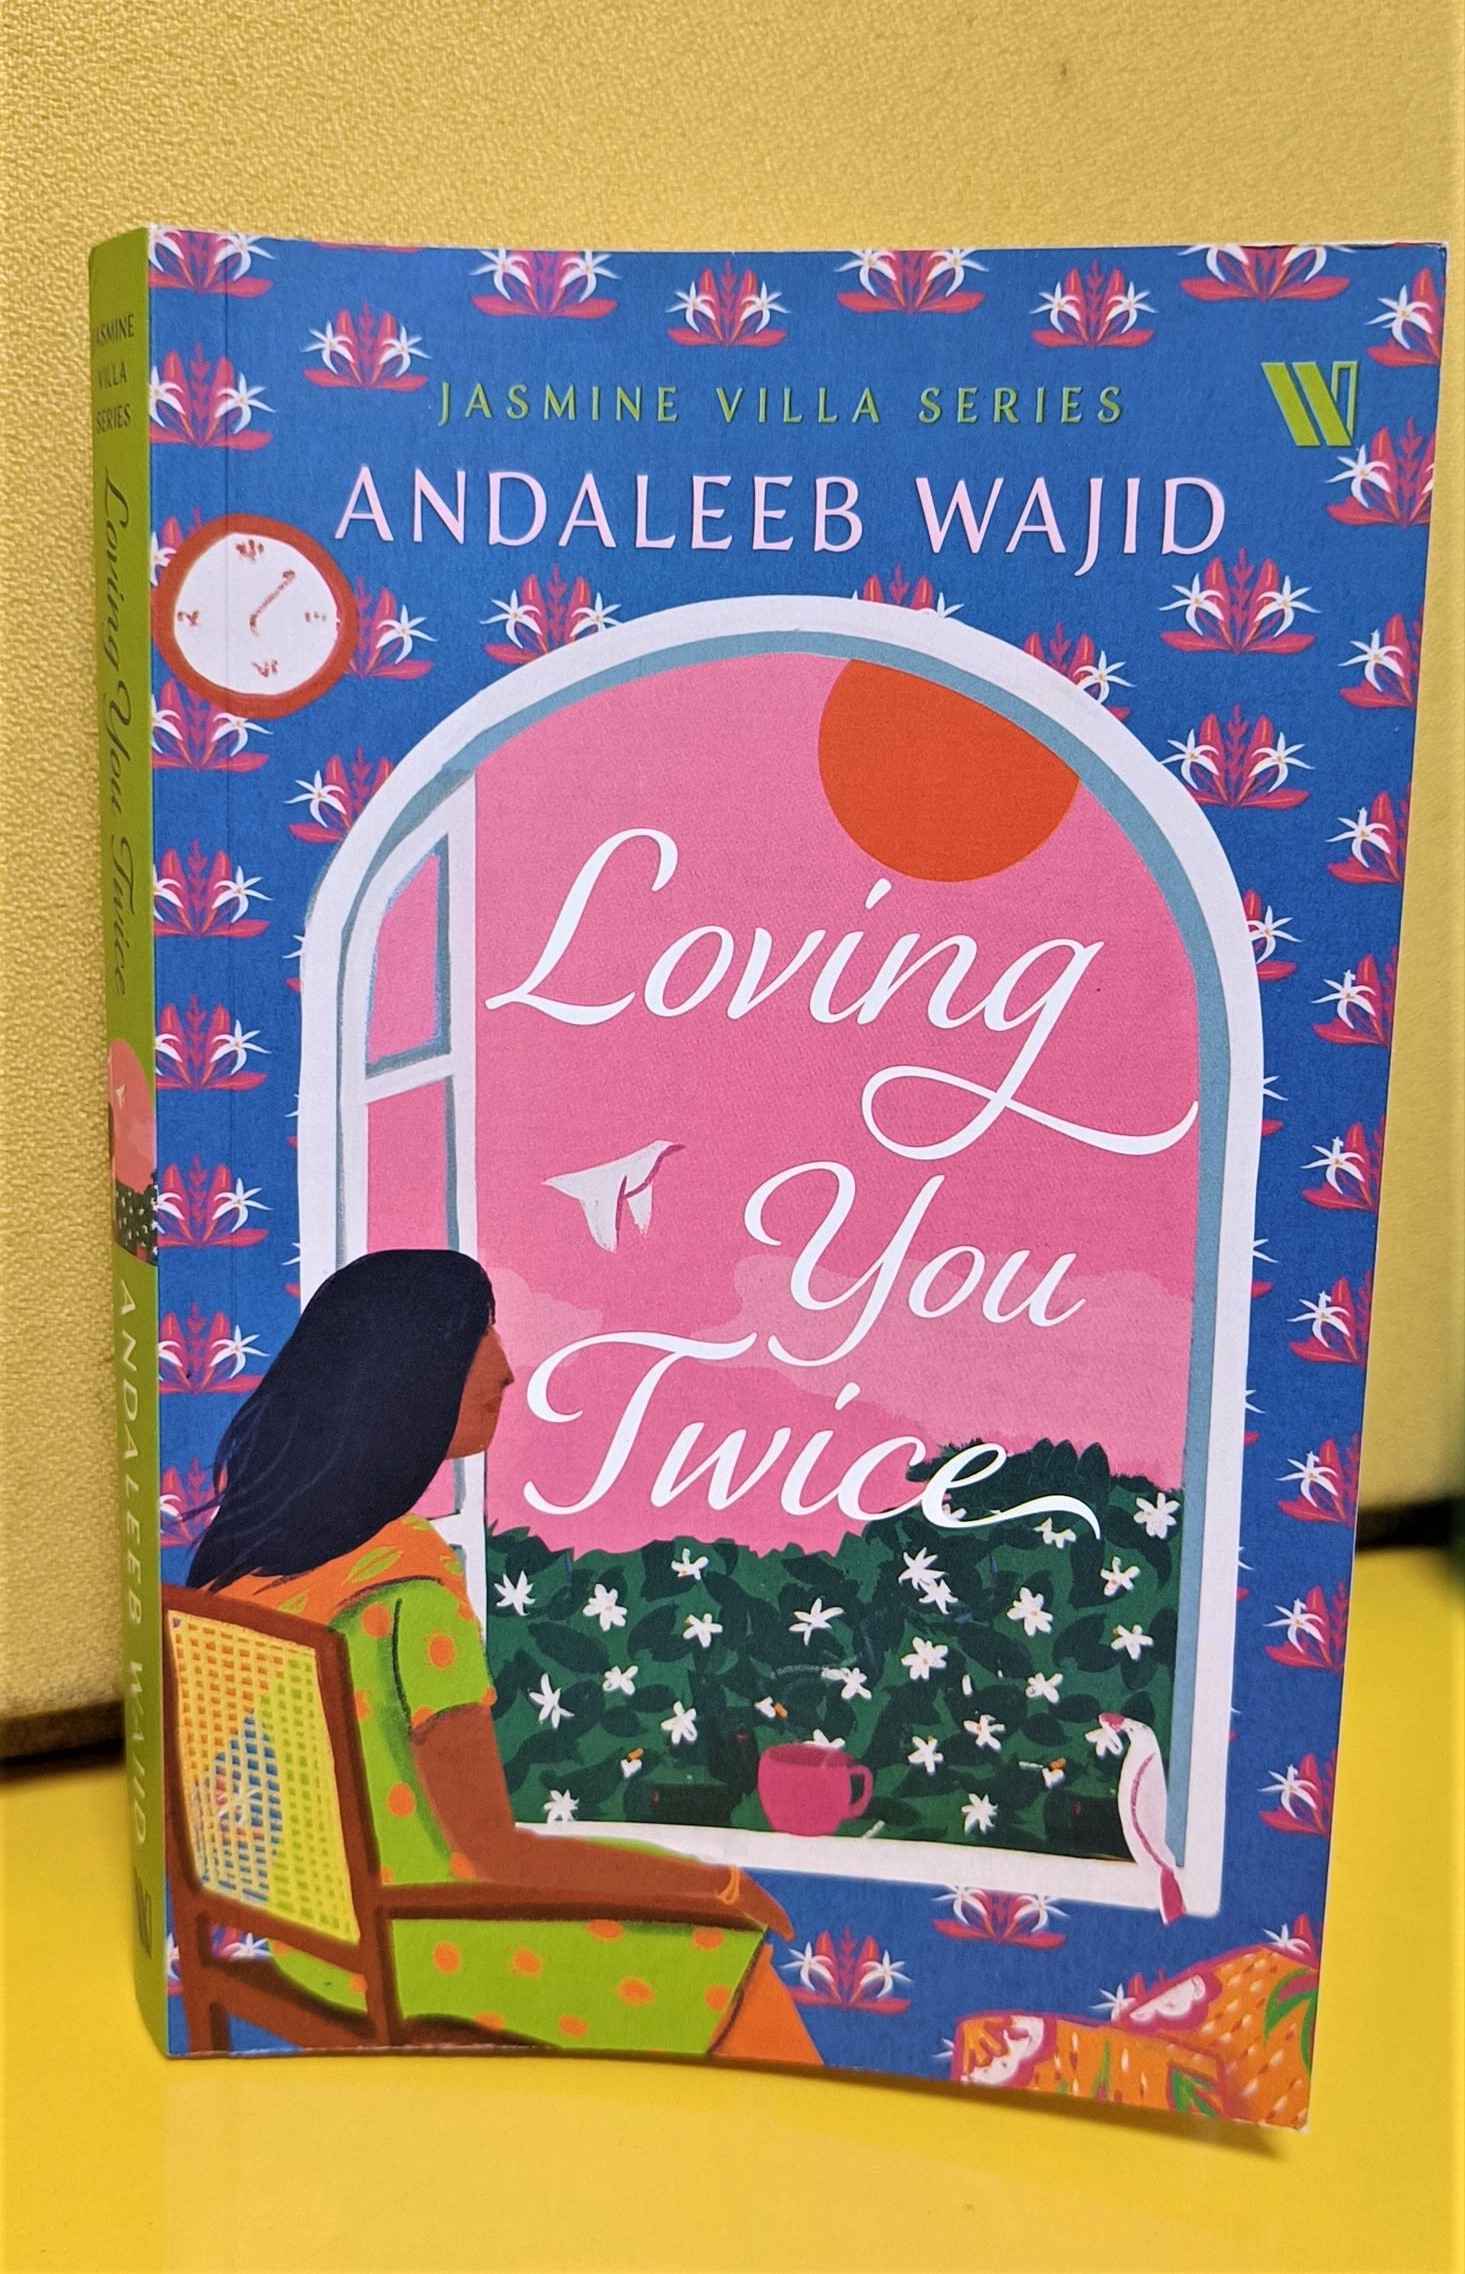 Loving you twice – Jasmine Villa series by Andaleeb Wajid #Bookreview